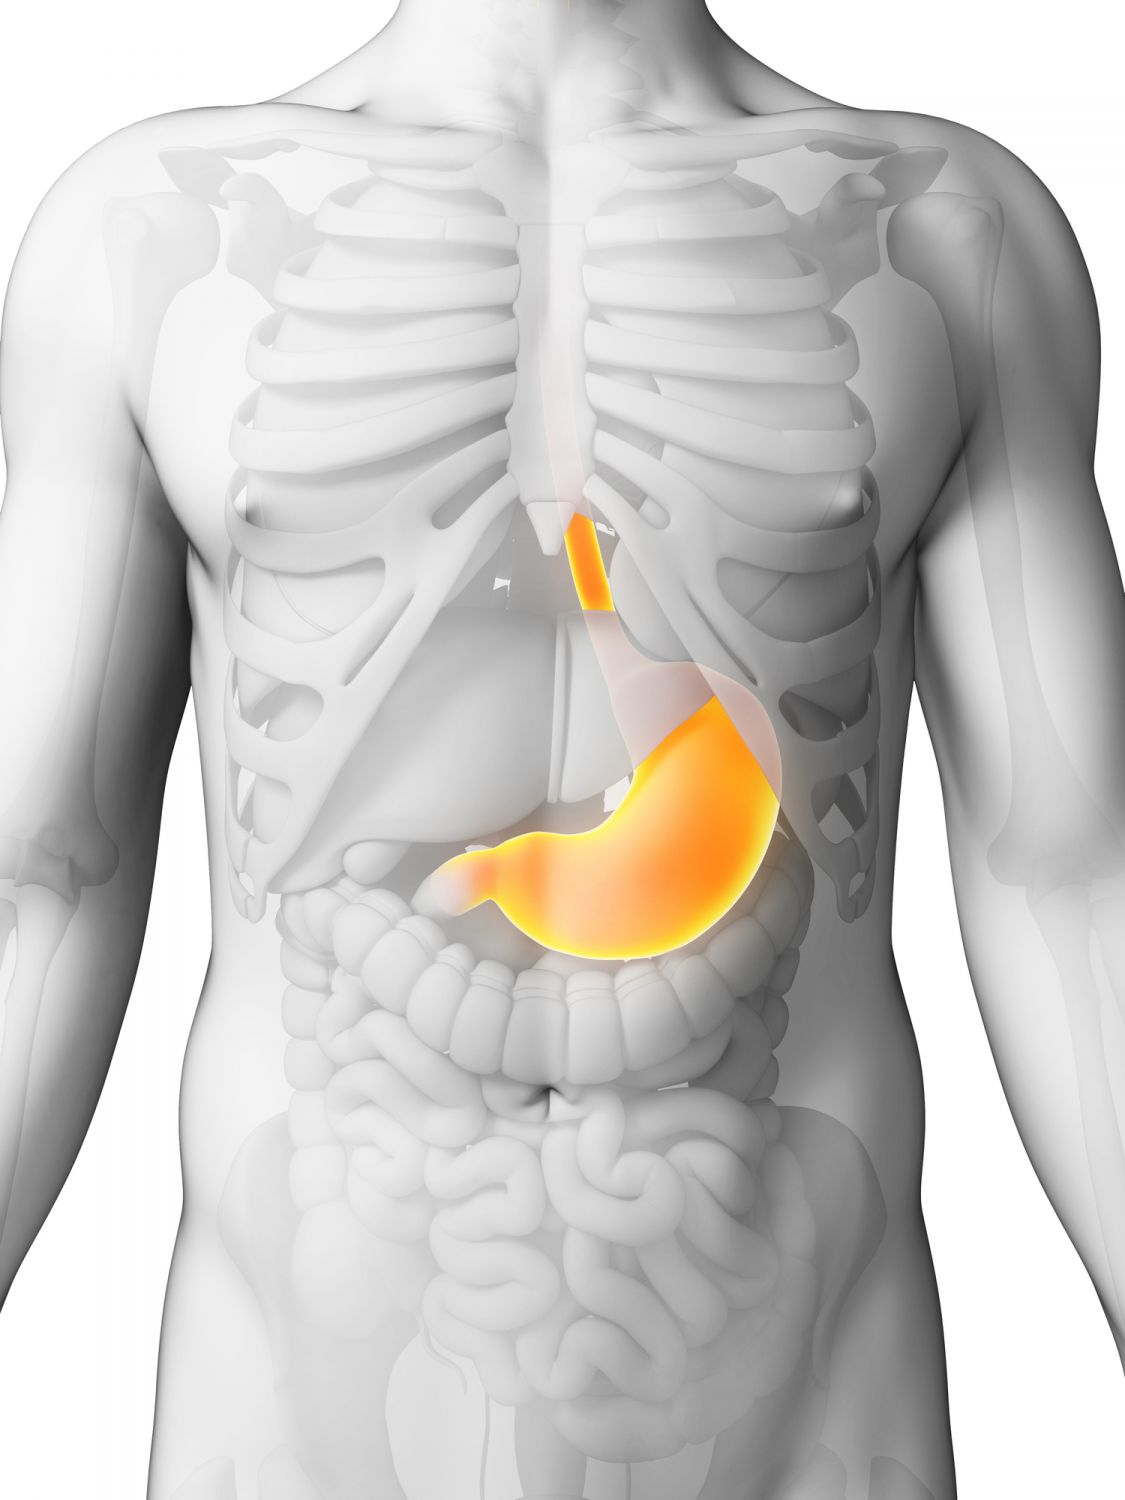 stomach-ulcer-diet281